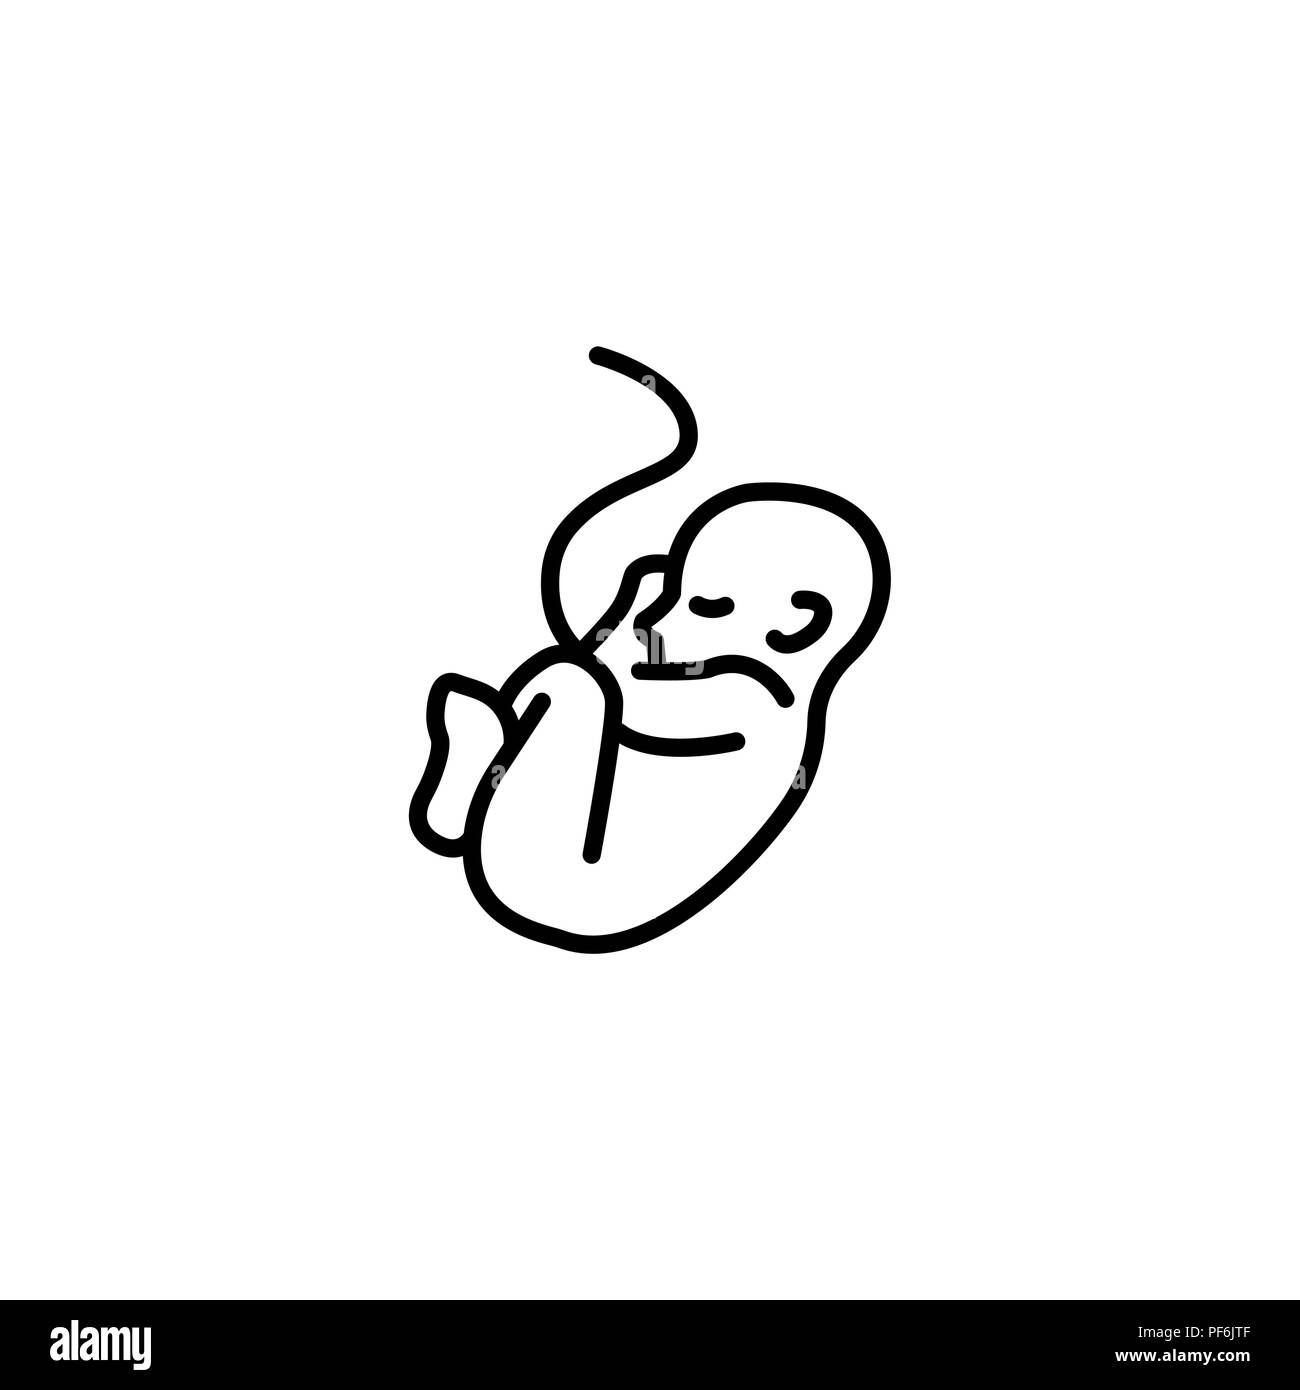 Web line icon. Embryo, baby symbol black on white background Stock Vector